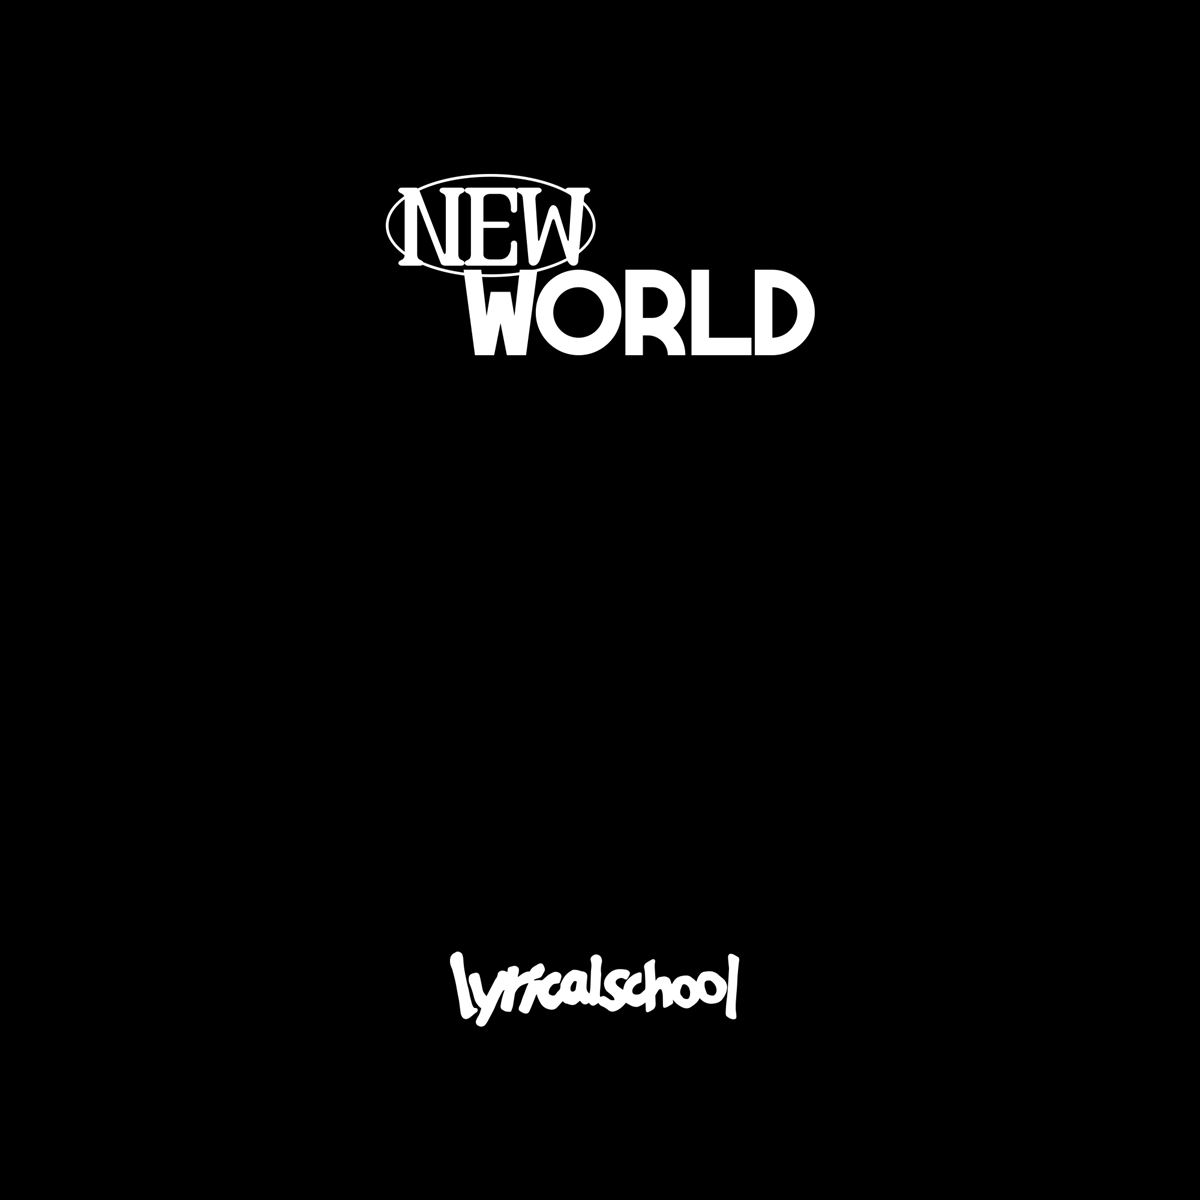 lyrical school「NEW WORLD」